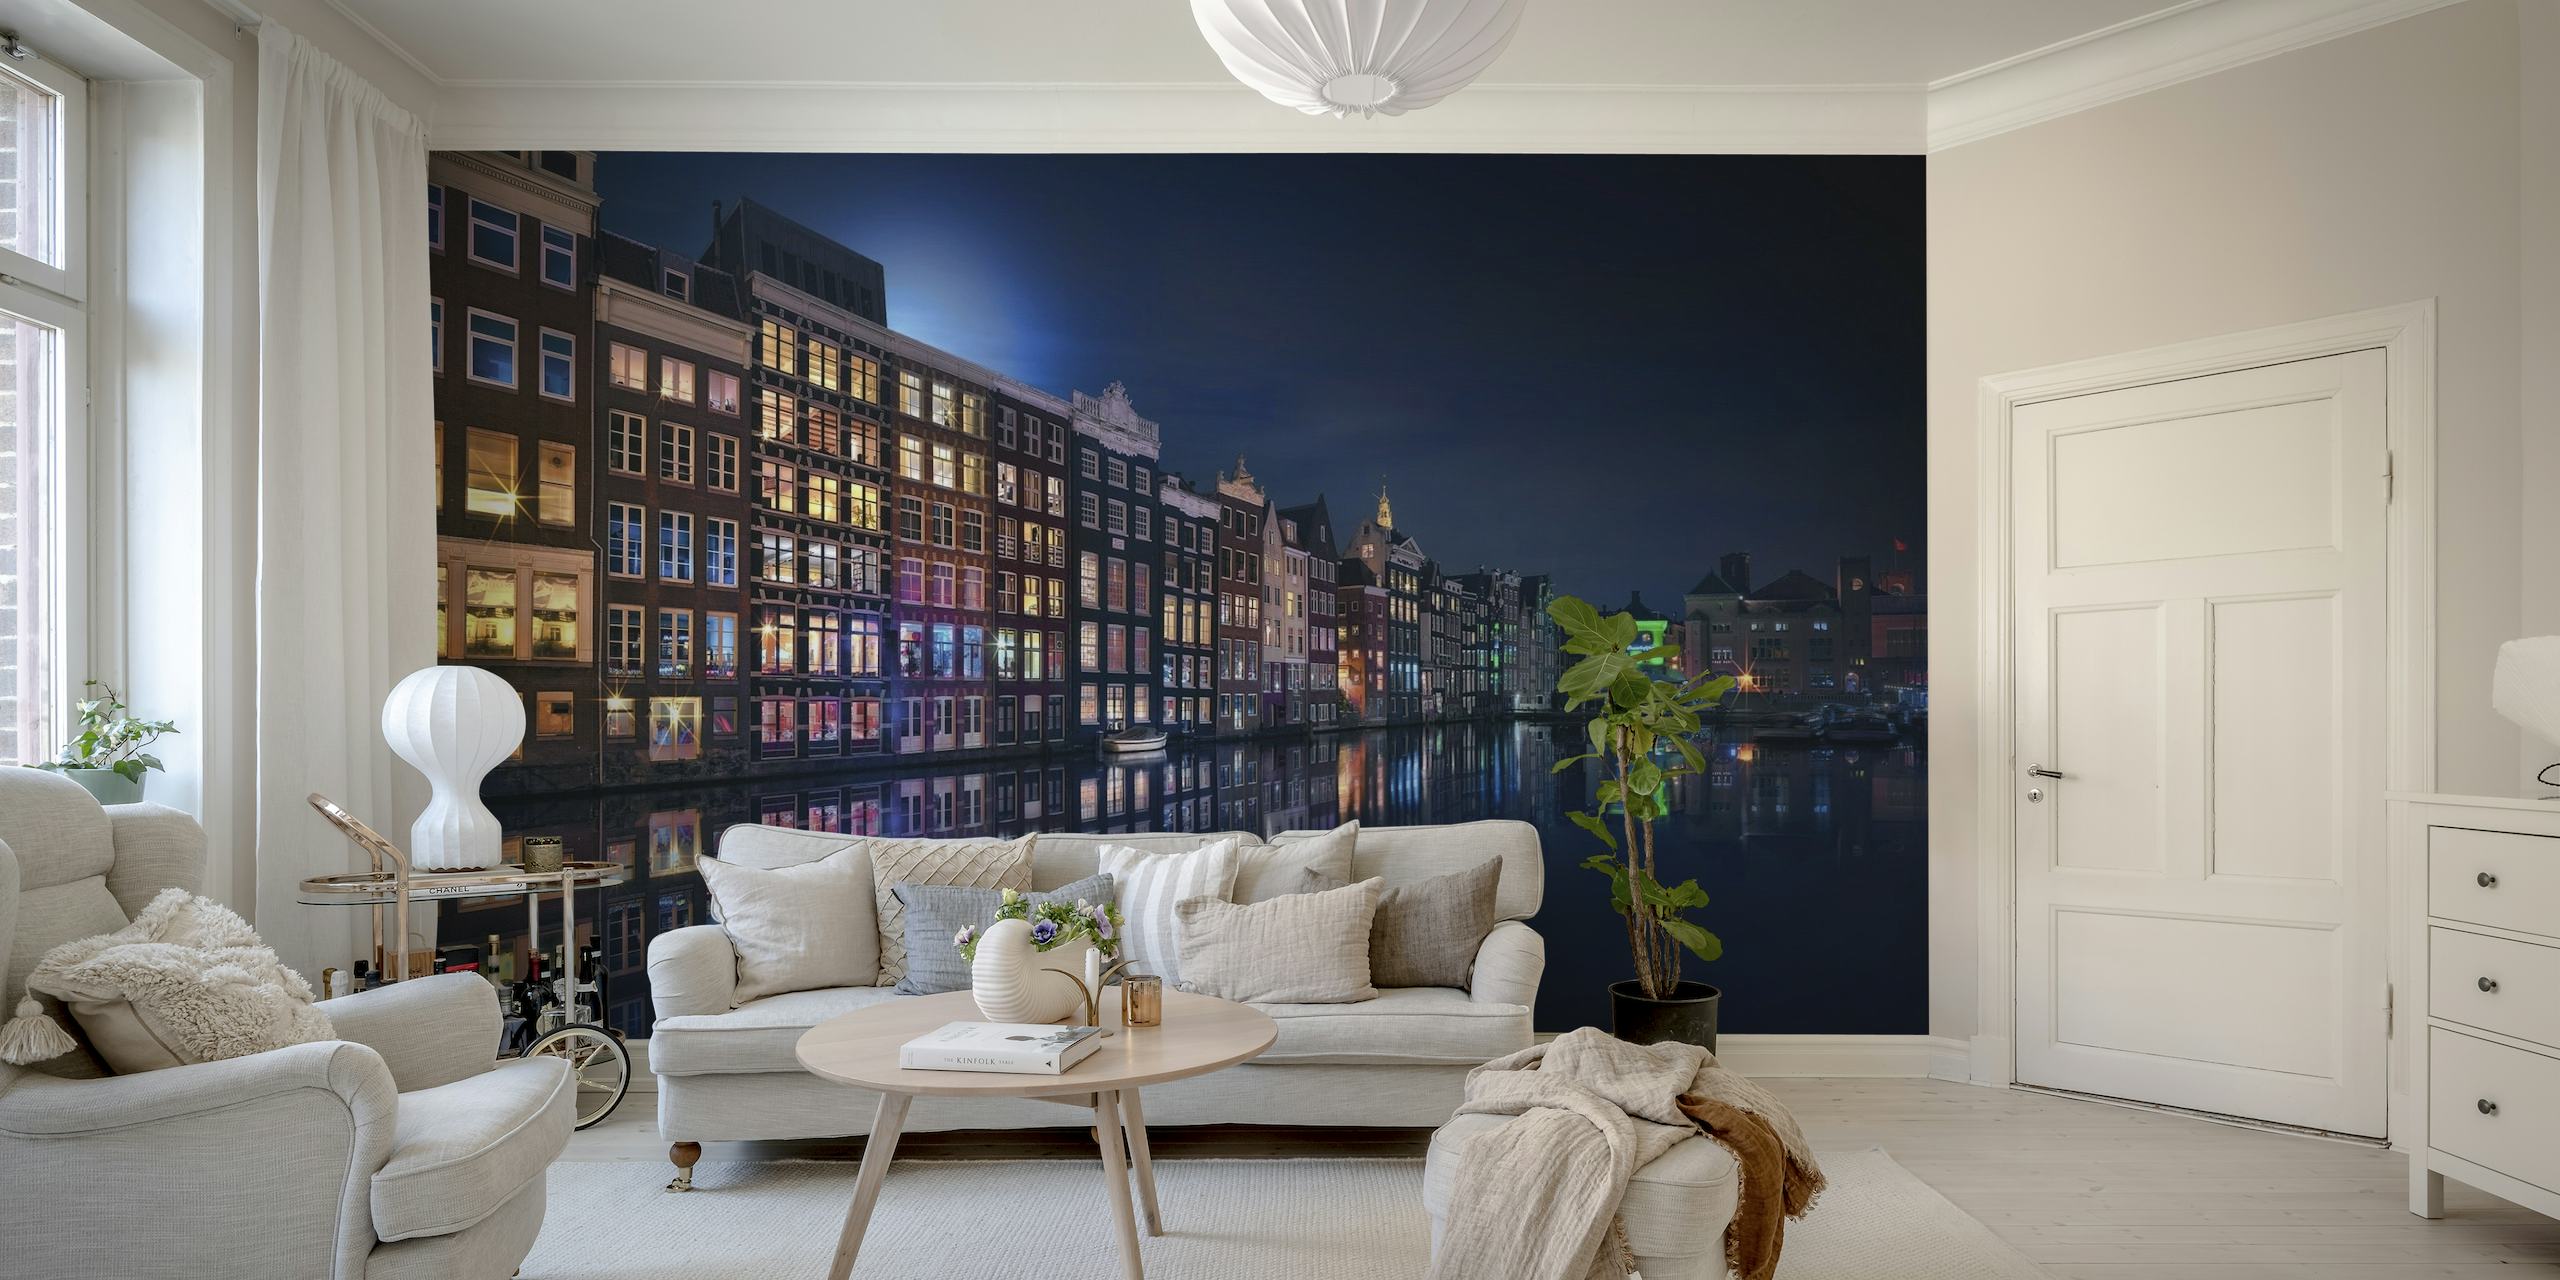 Amsterdam Windows Colors behang